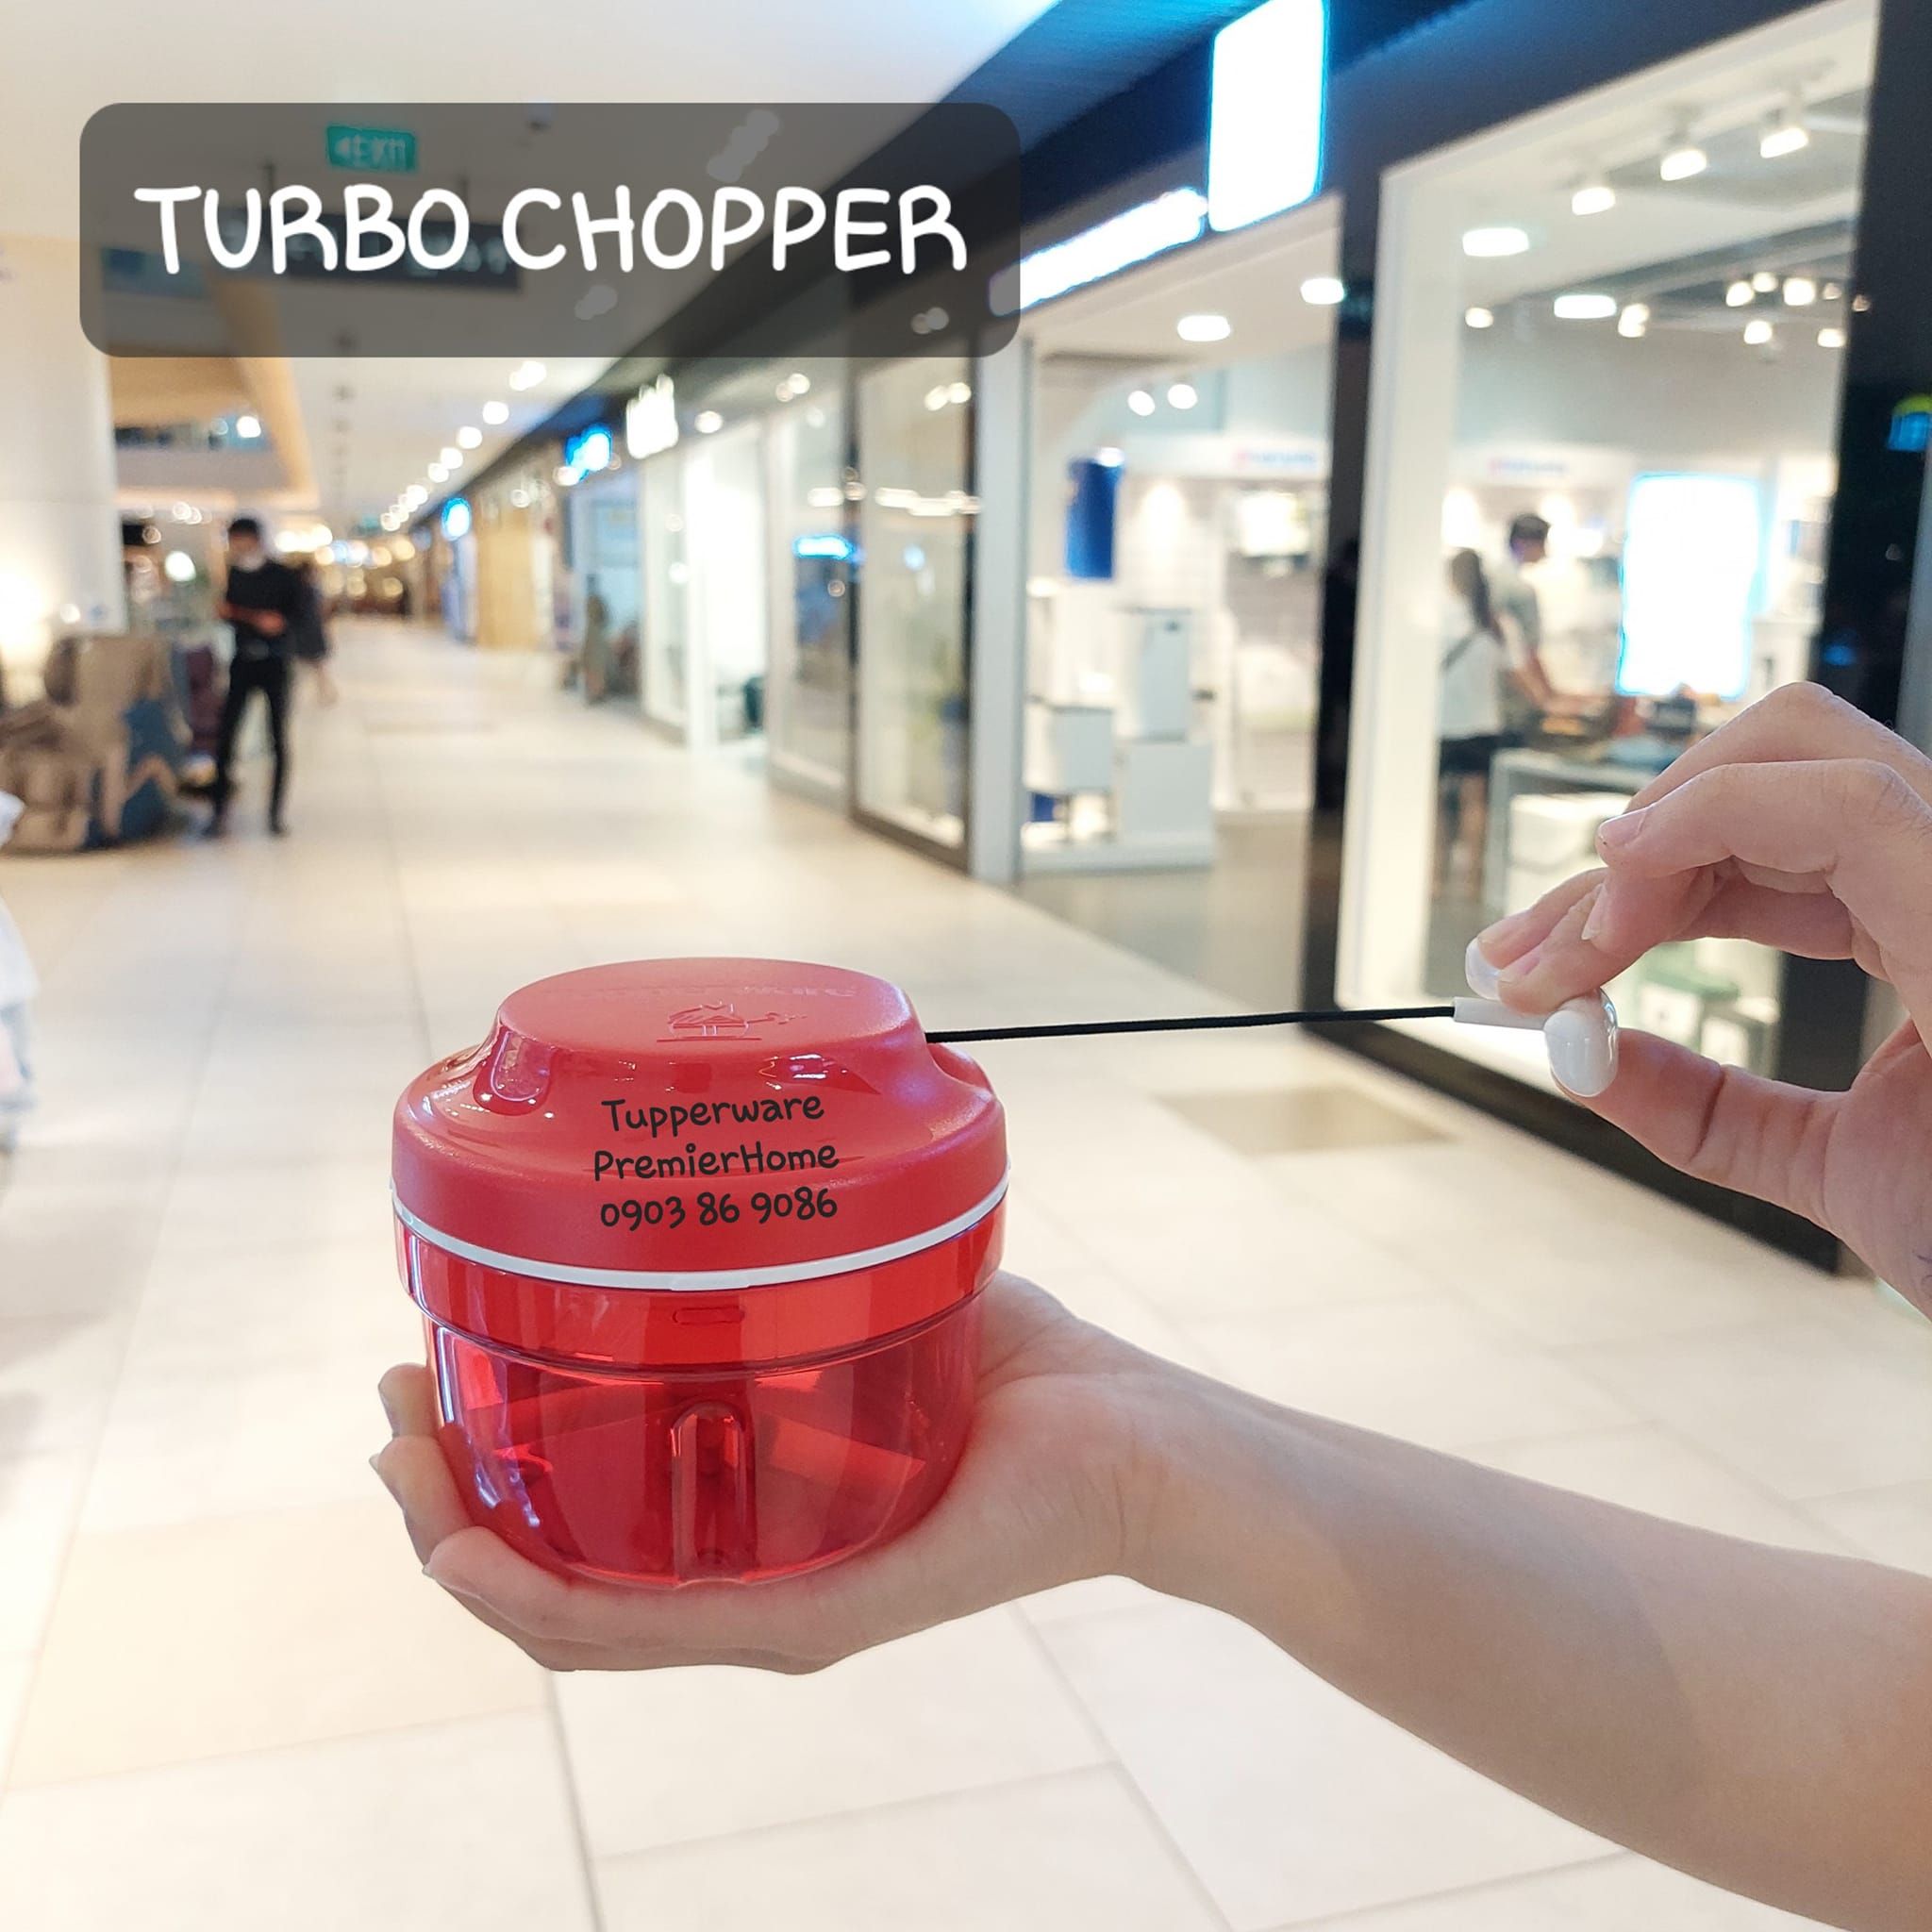 TUPPERWARE - Turbo Chopper